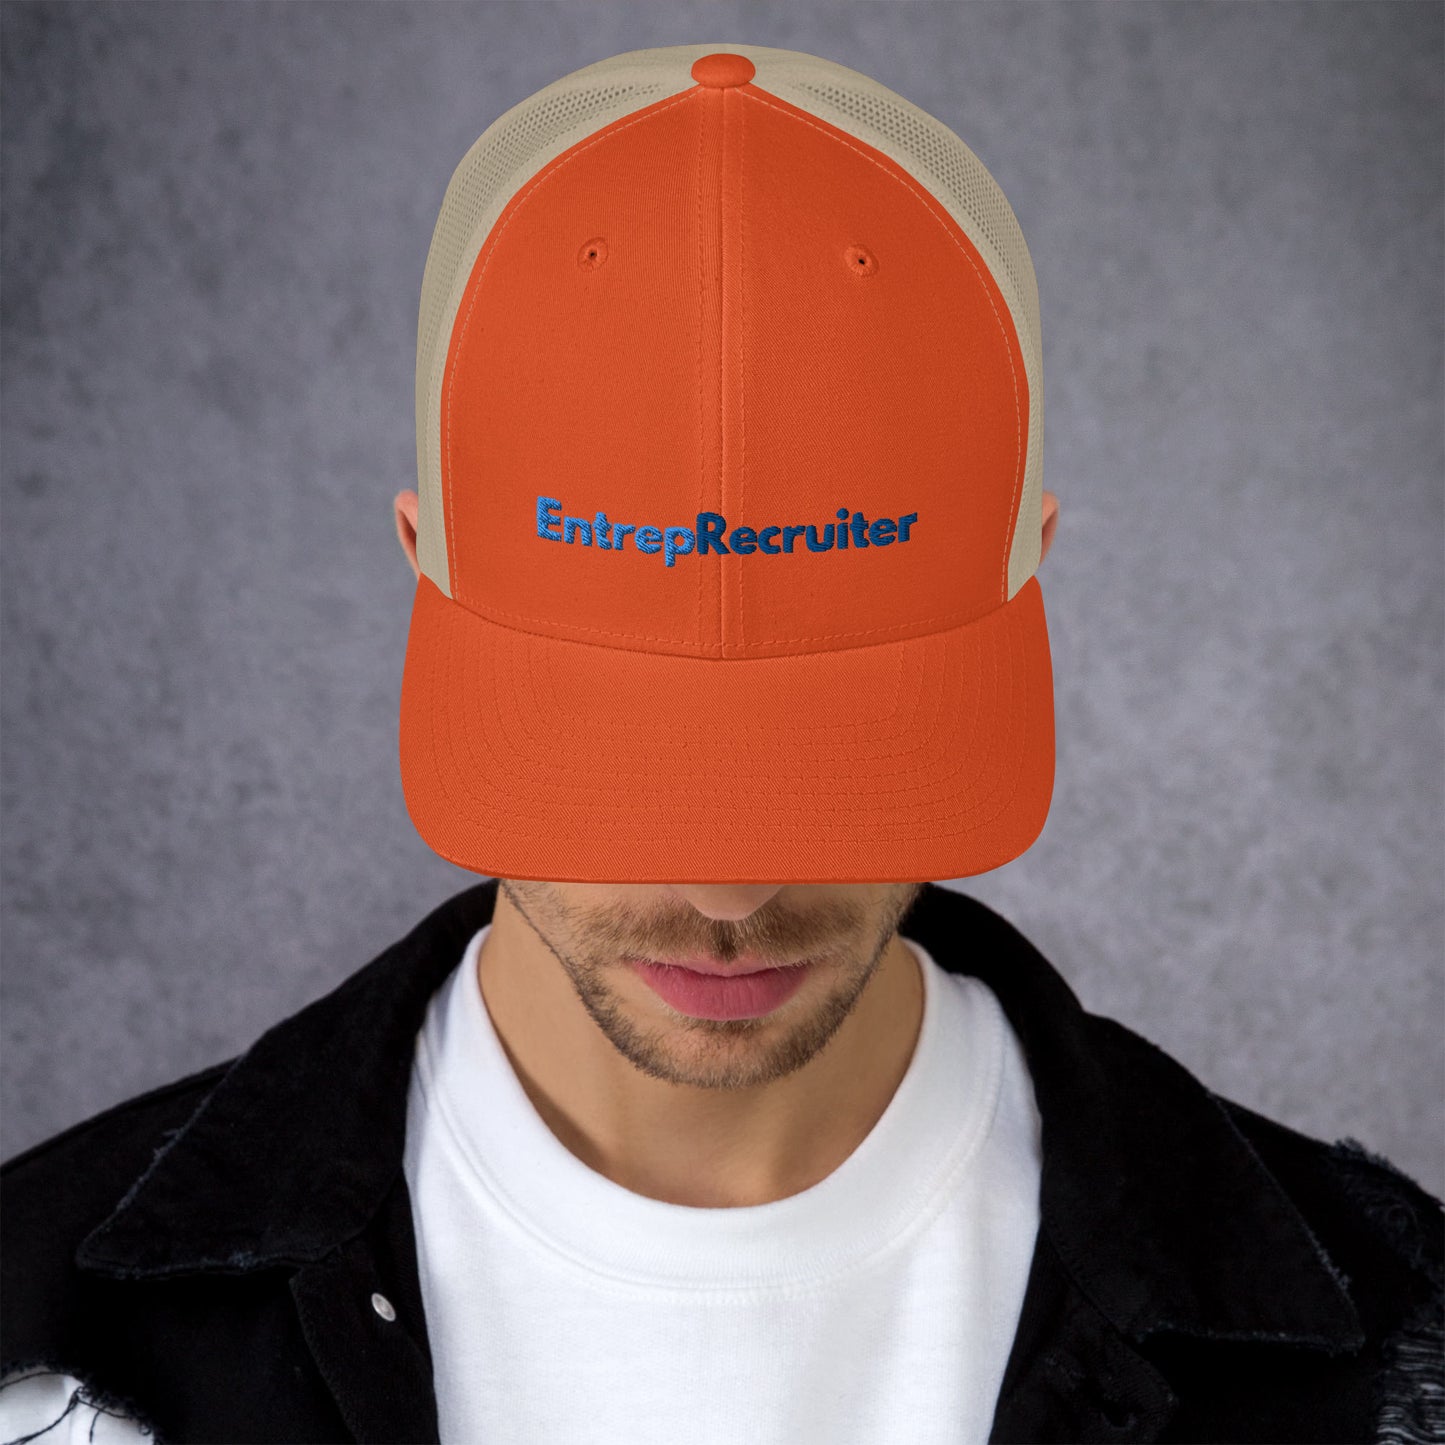 EntrepRecruiter Trucker Cap  - The Millionaire Recruiter